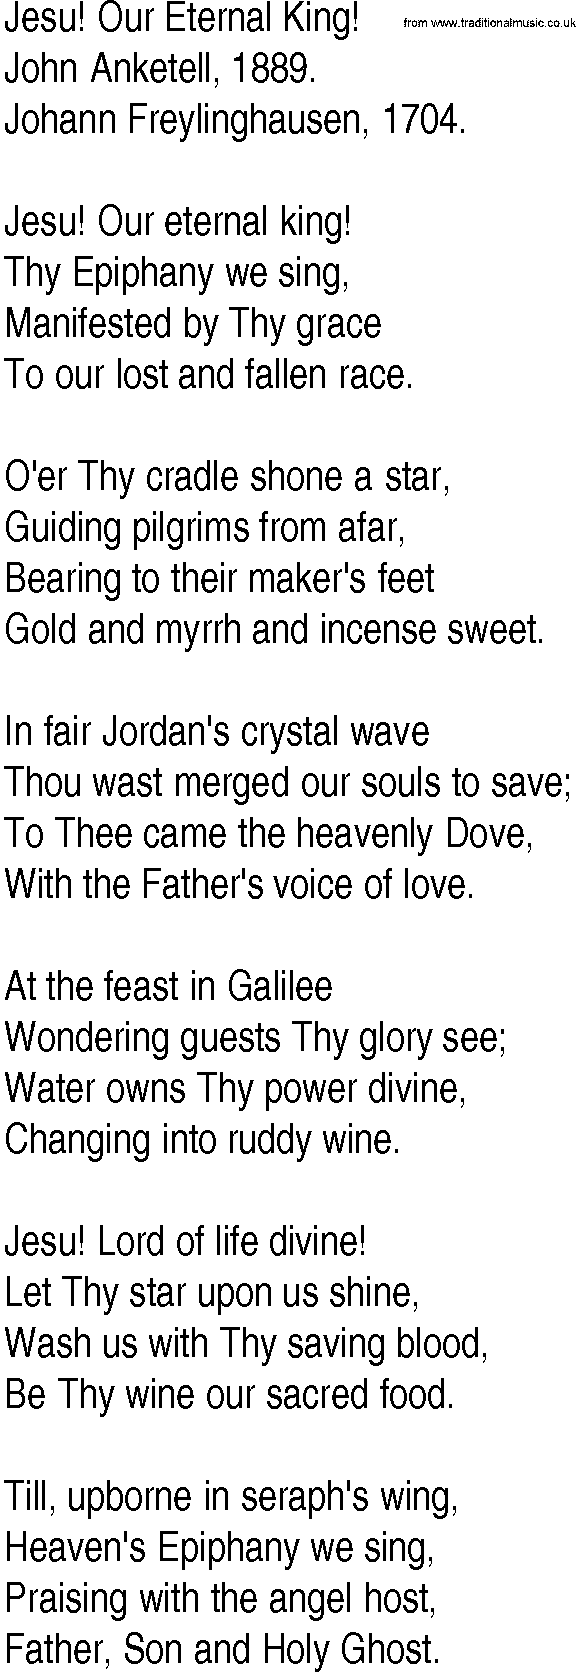 Hymn and Gospel Song: Jesu! Our Eternal King! by John Anketell lyrics